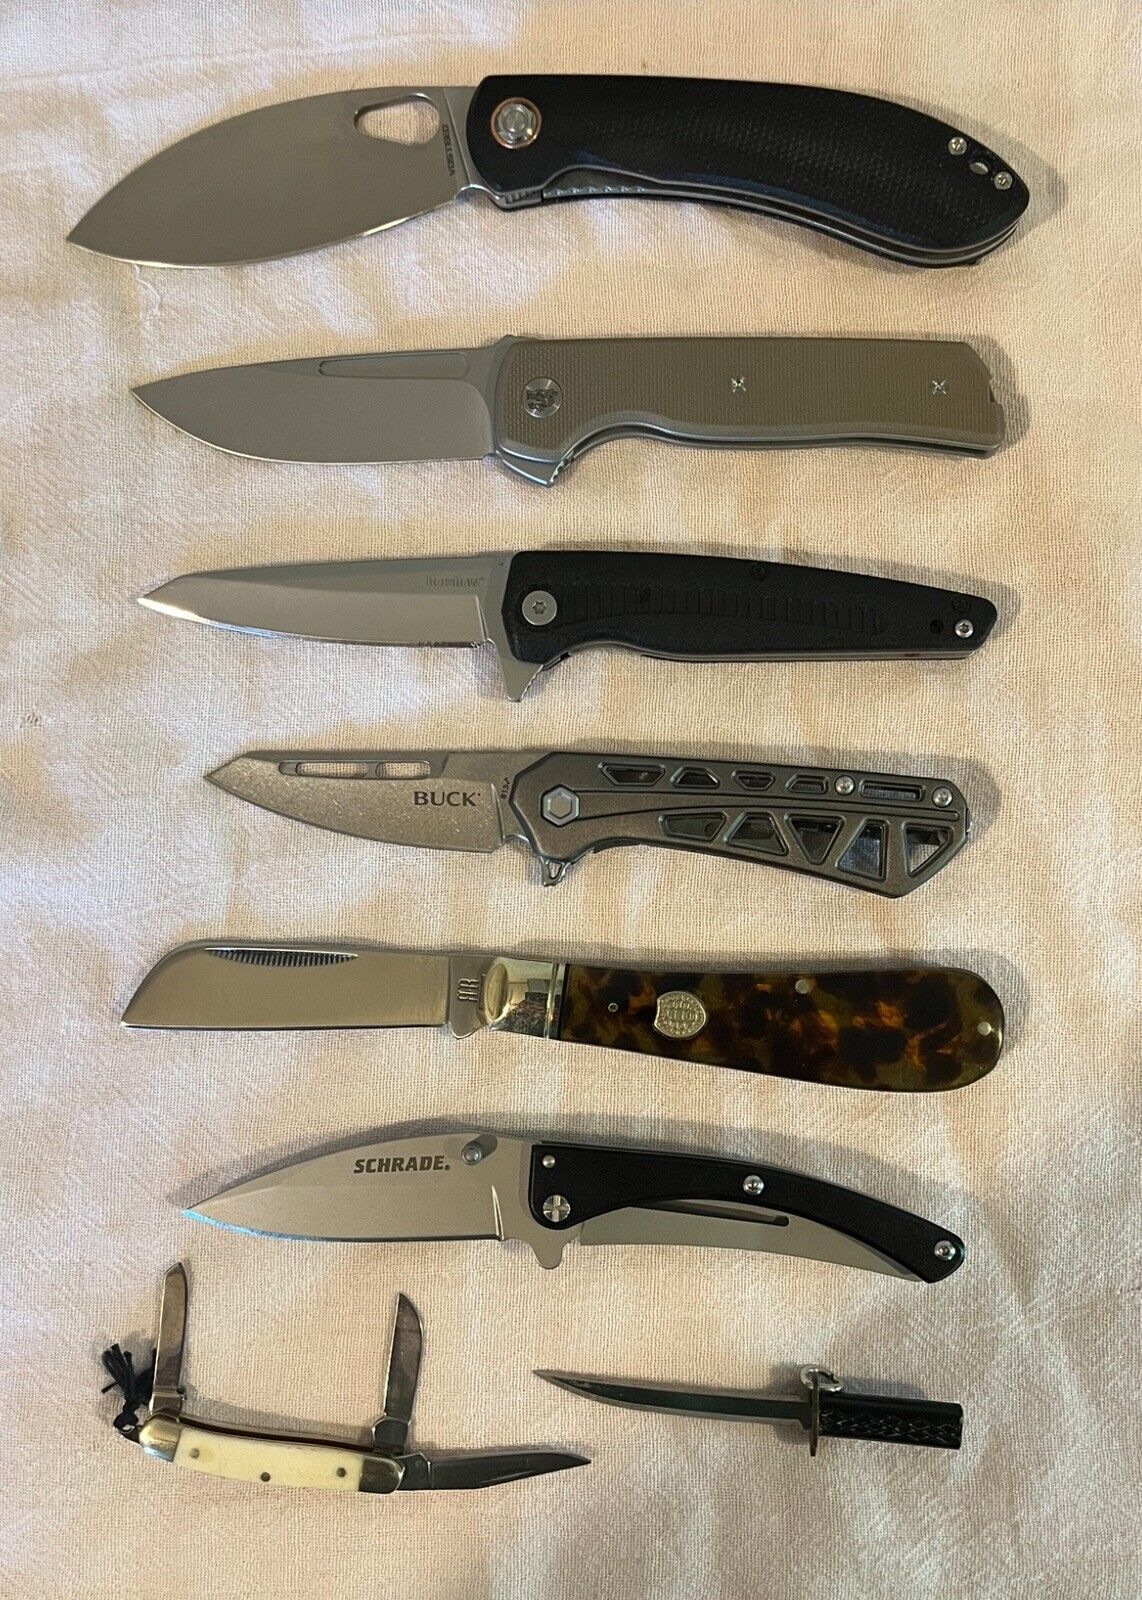 used pocket knife Lot